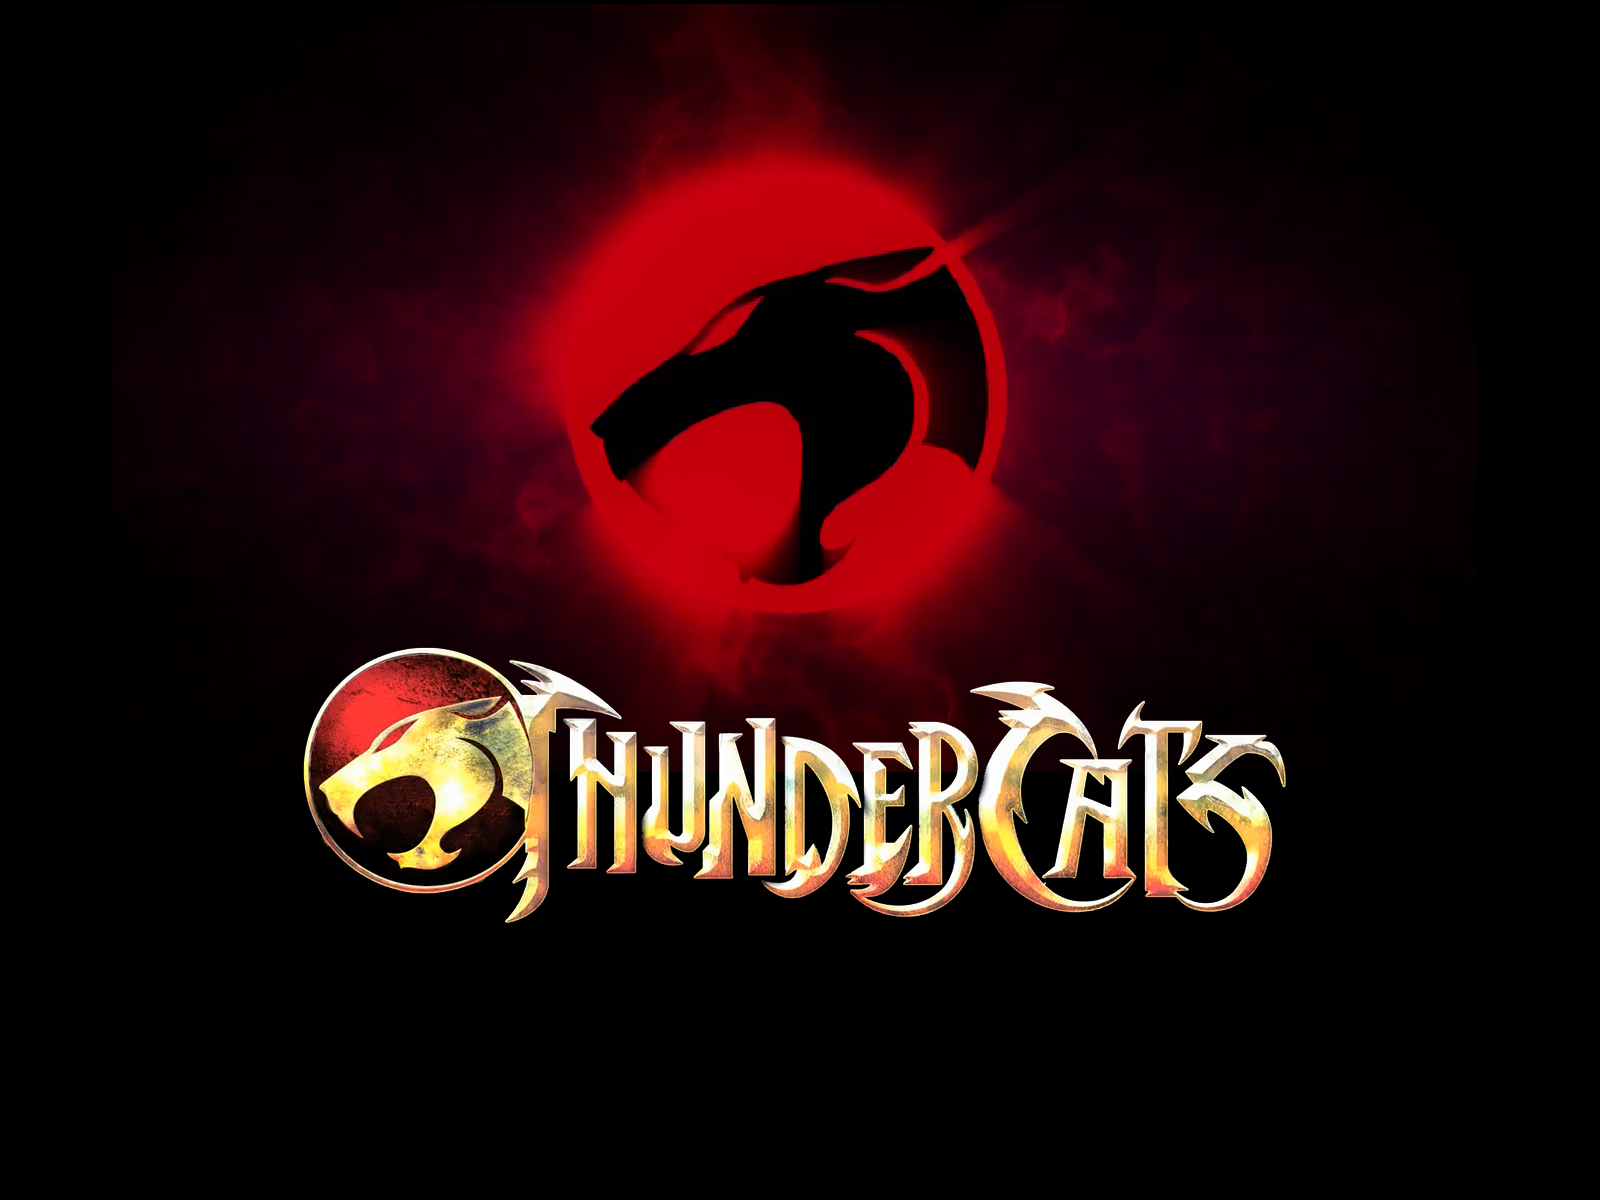 Thundercats (2011) Wallpapers